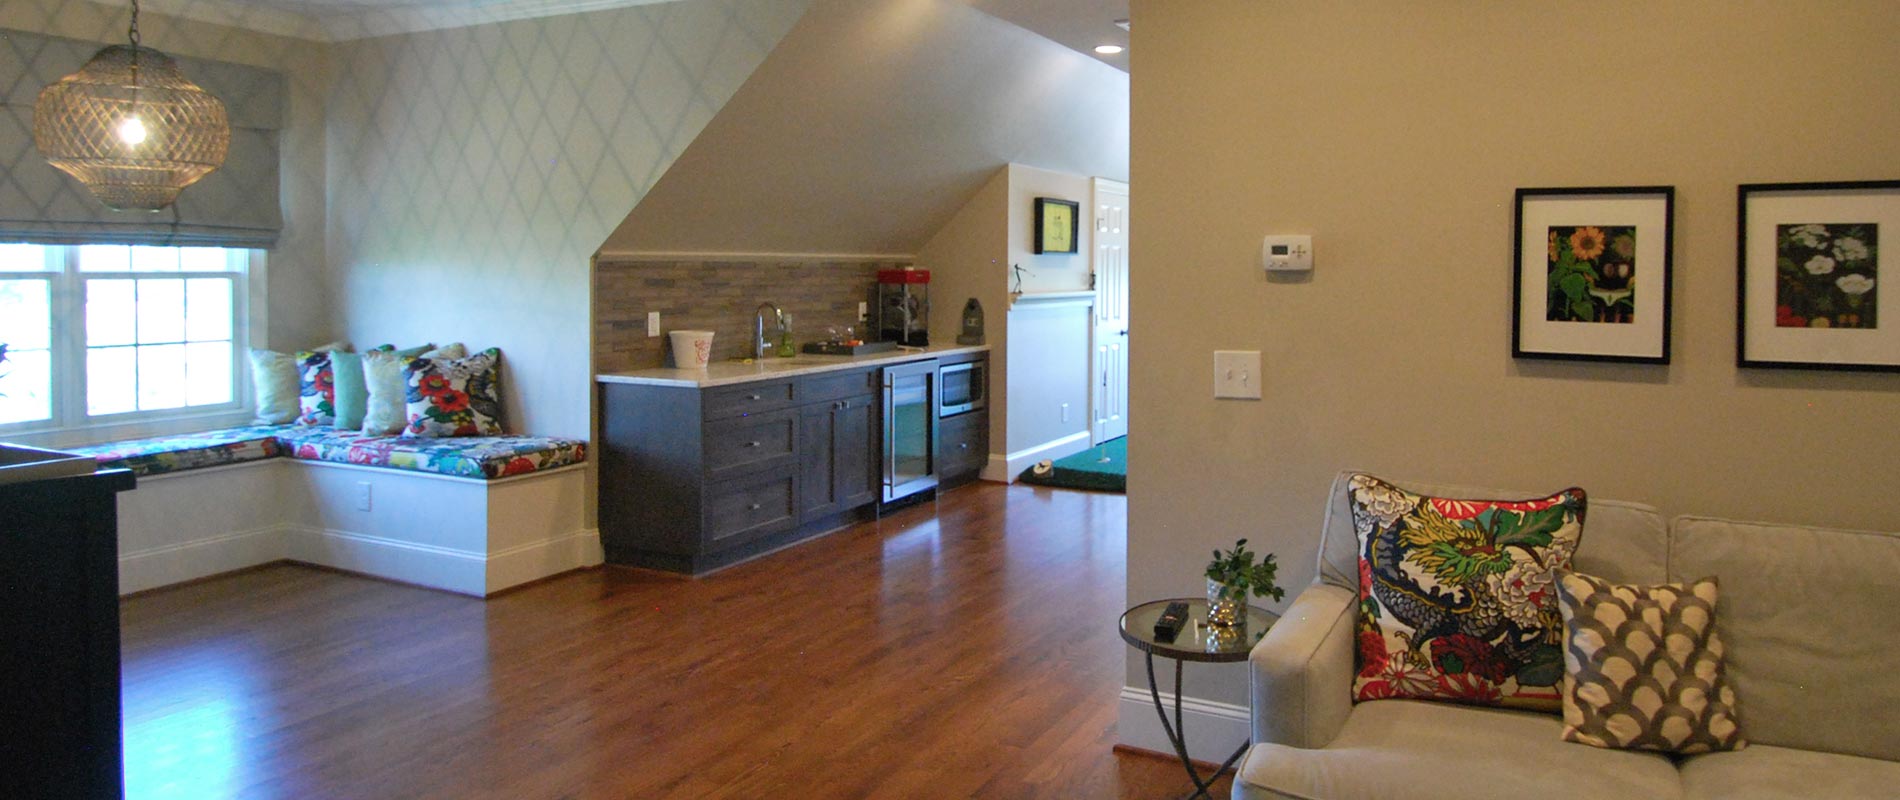 Living Room Renovation | Complete Construction Company | Apex, NC